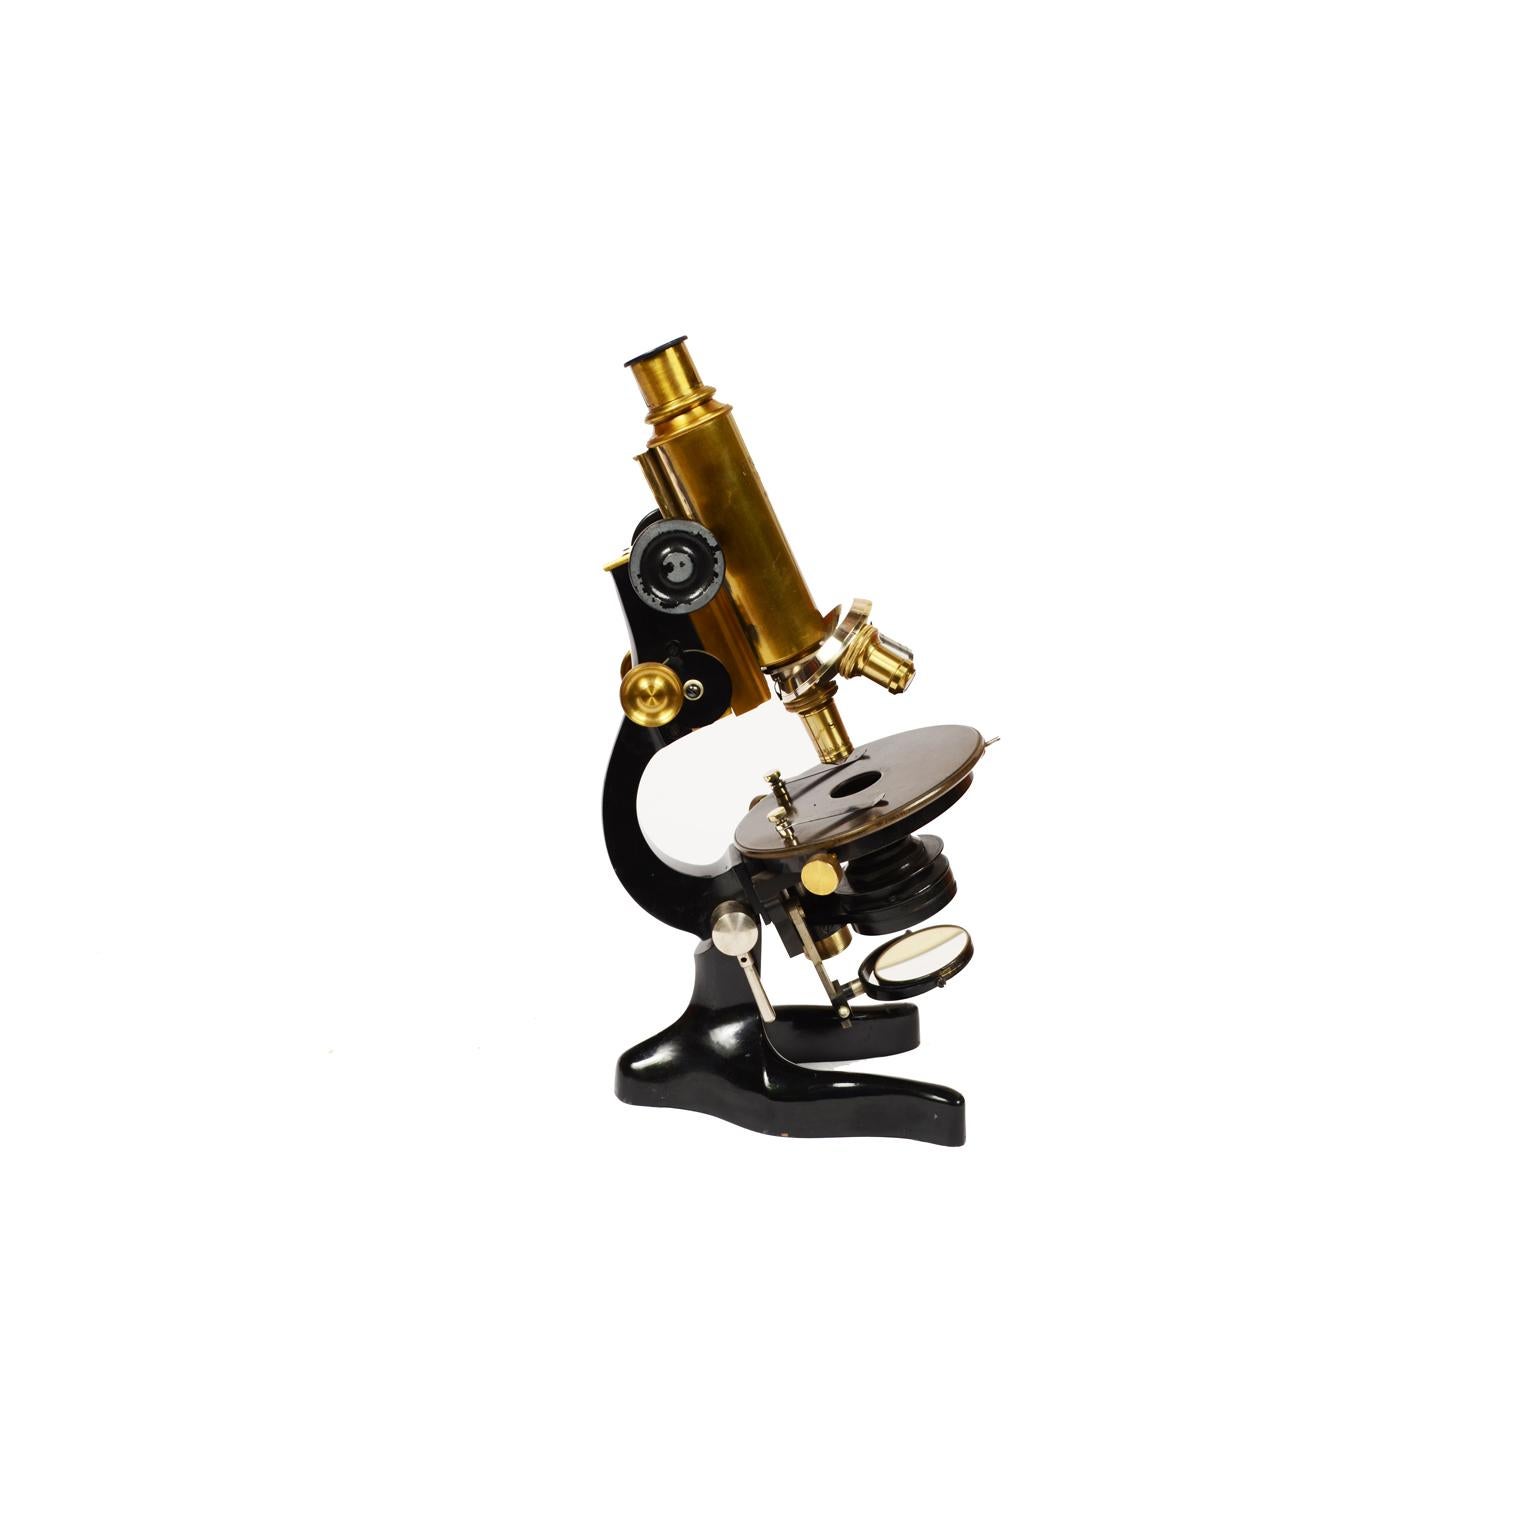 20th Century Koristka Milan Microscope Made of Black Painted Brass, Early 1900s